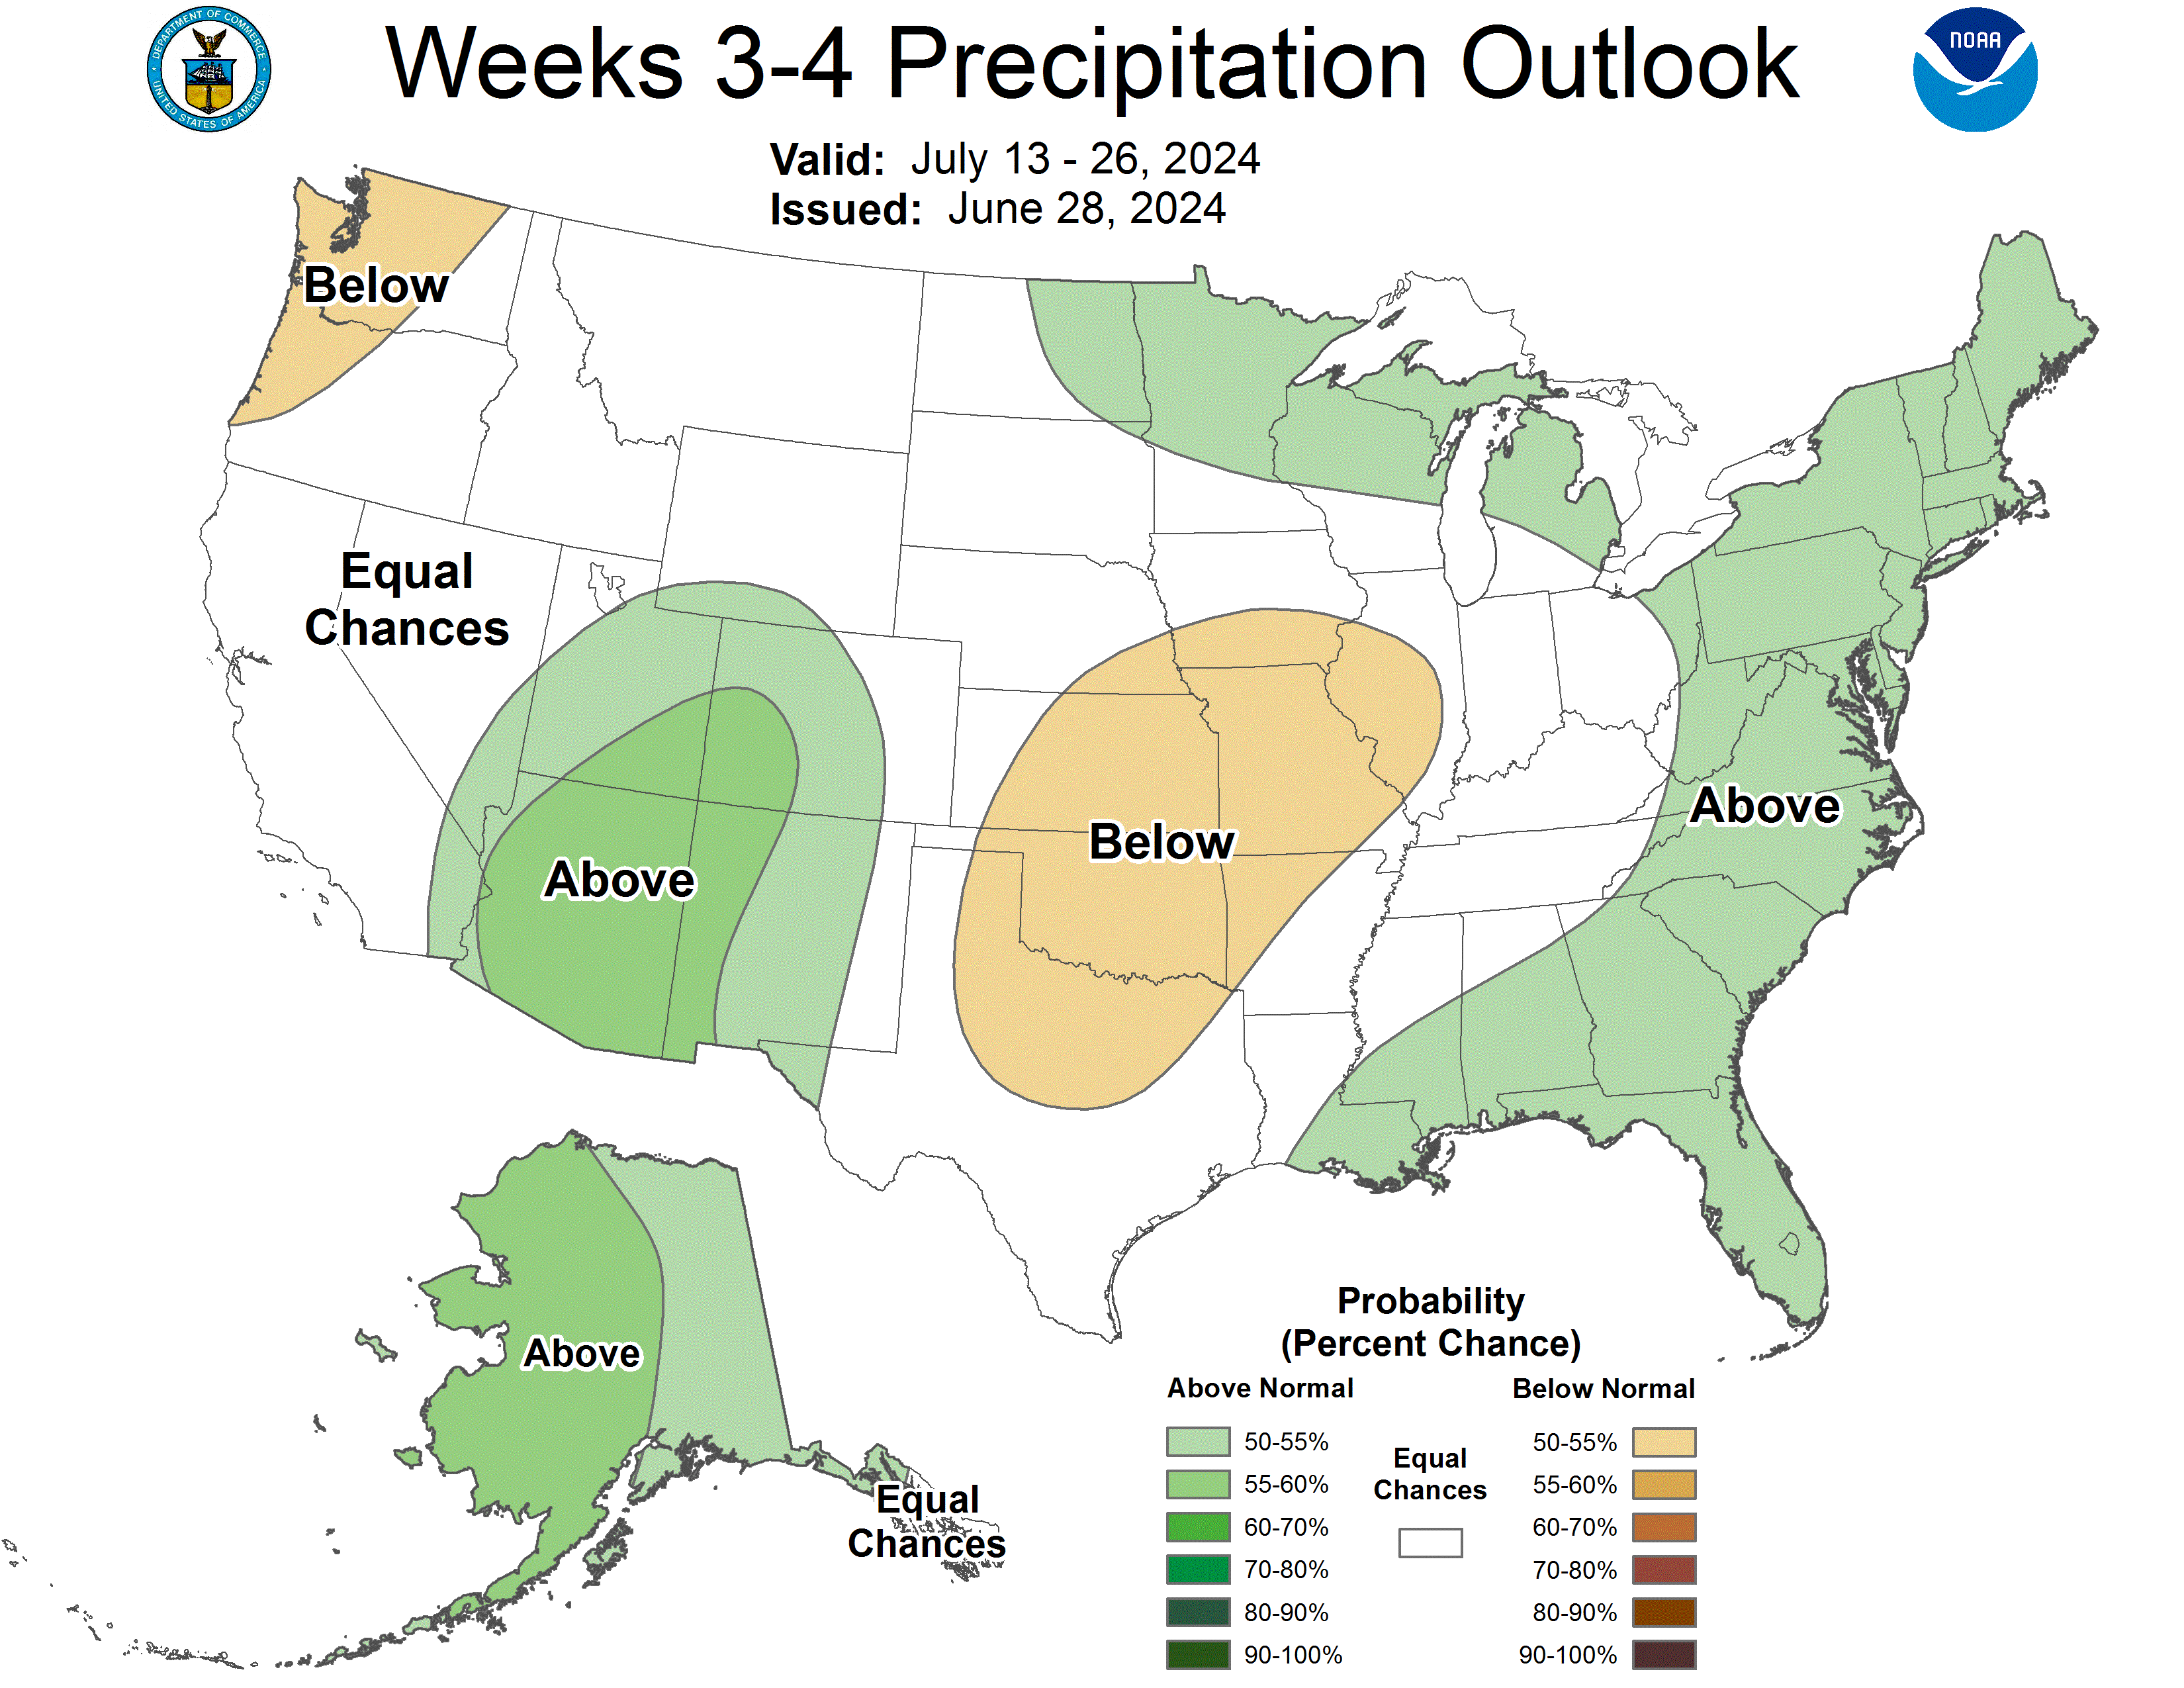 Week 3-4 precipitation outlook